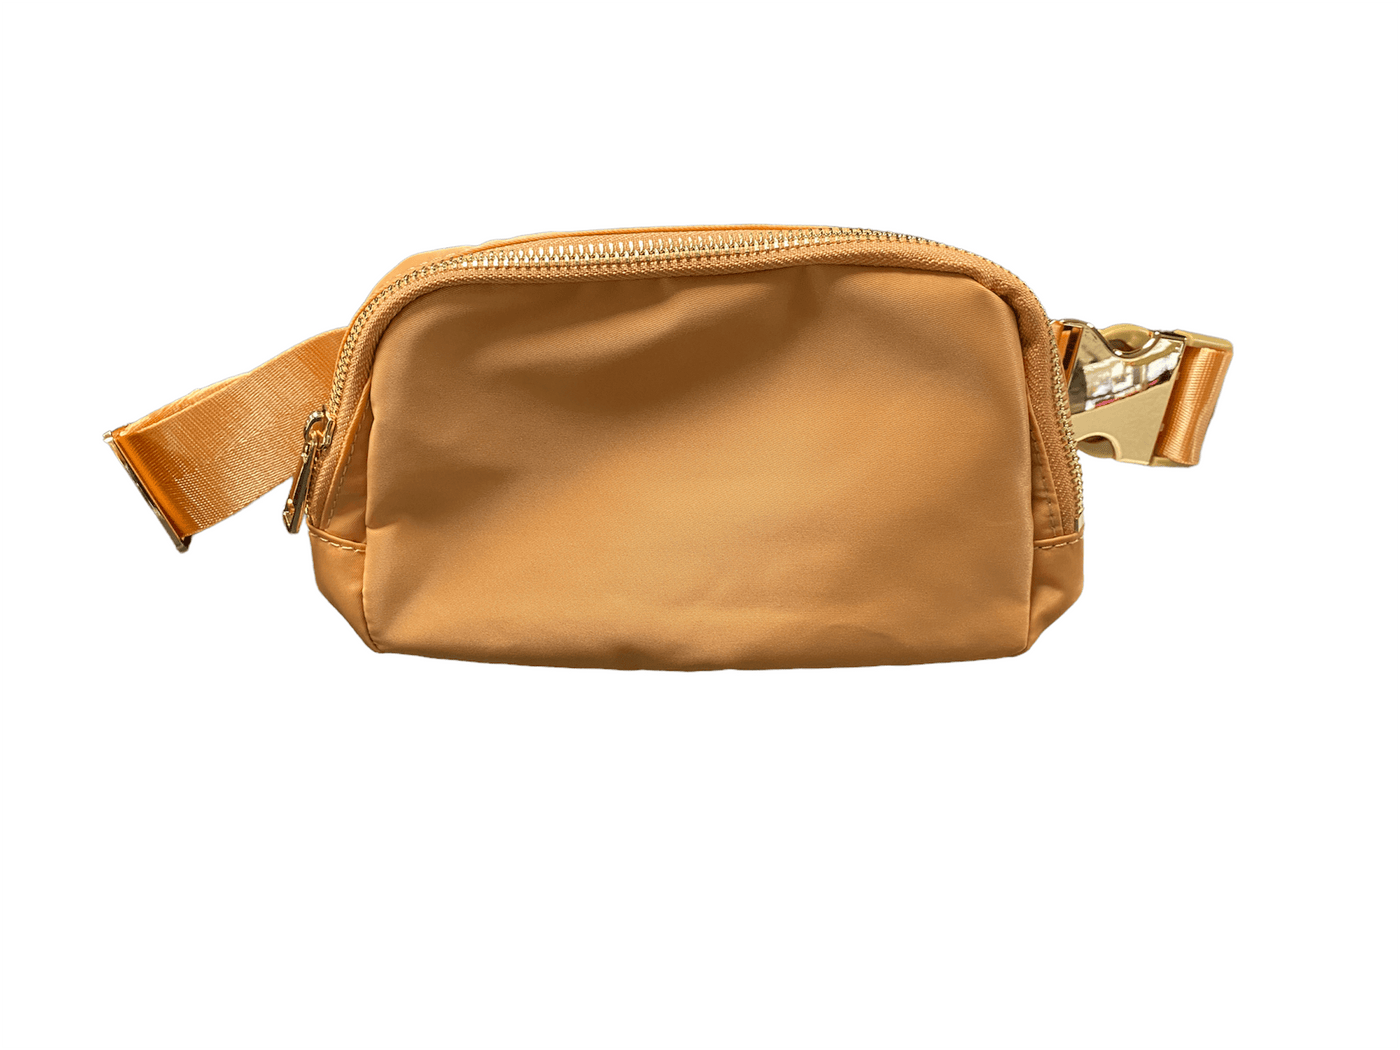 Peach Belt Bag with rose gold hardware.